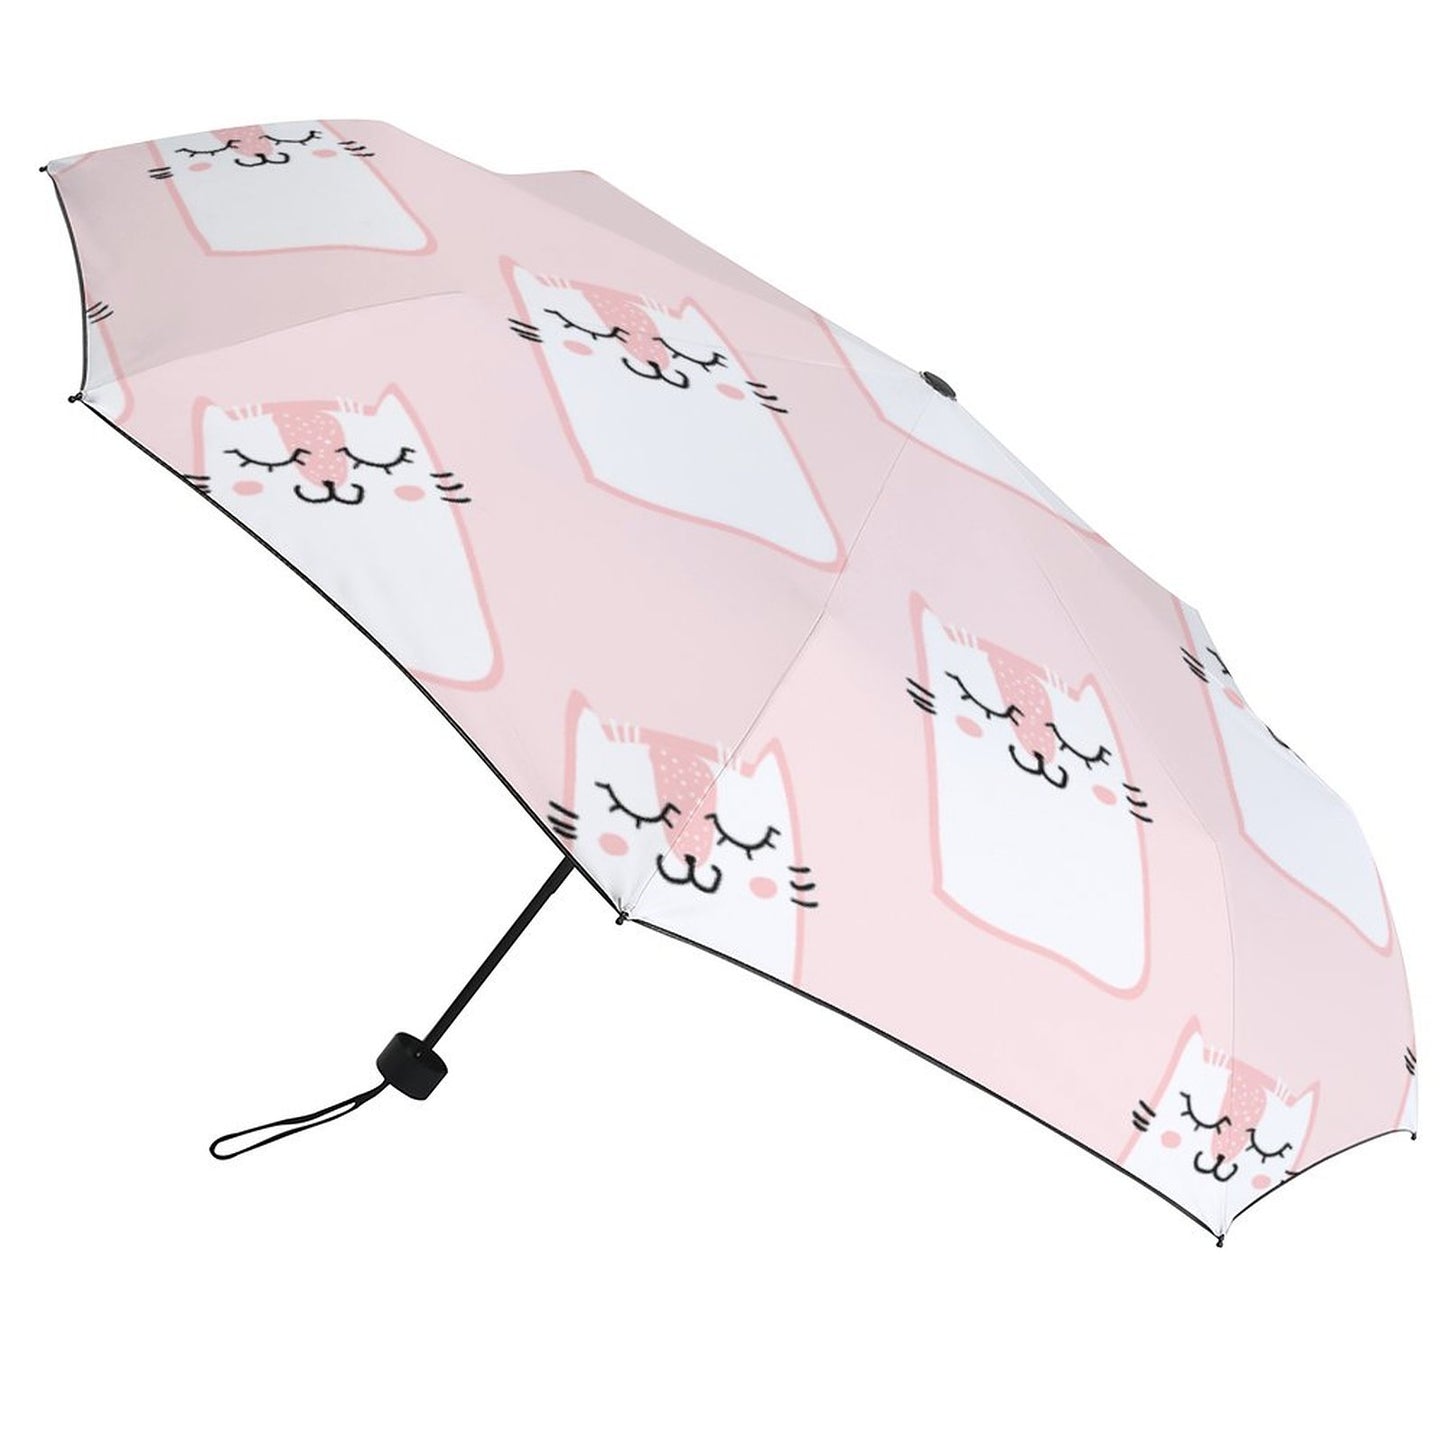 Online DIY 3 Fold Umbrella Manual Paper Airplane Cute Cartoon Characters Pink